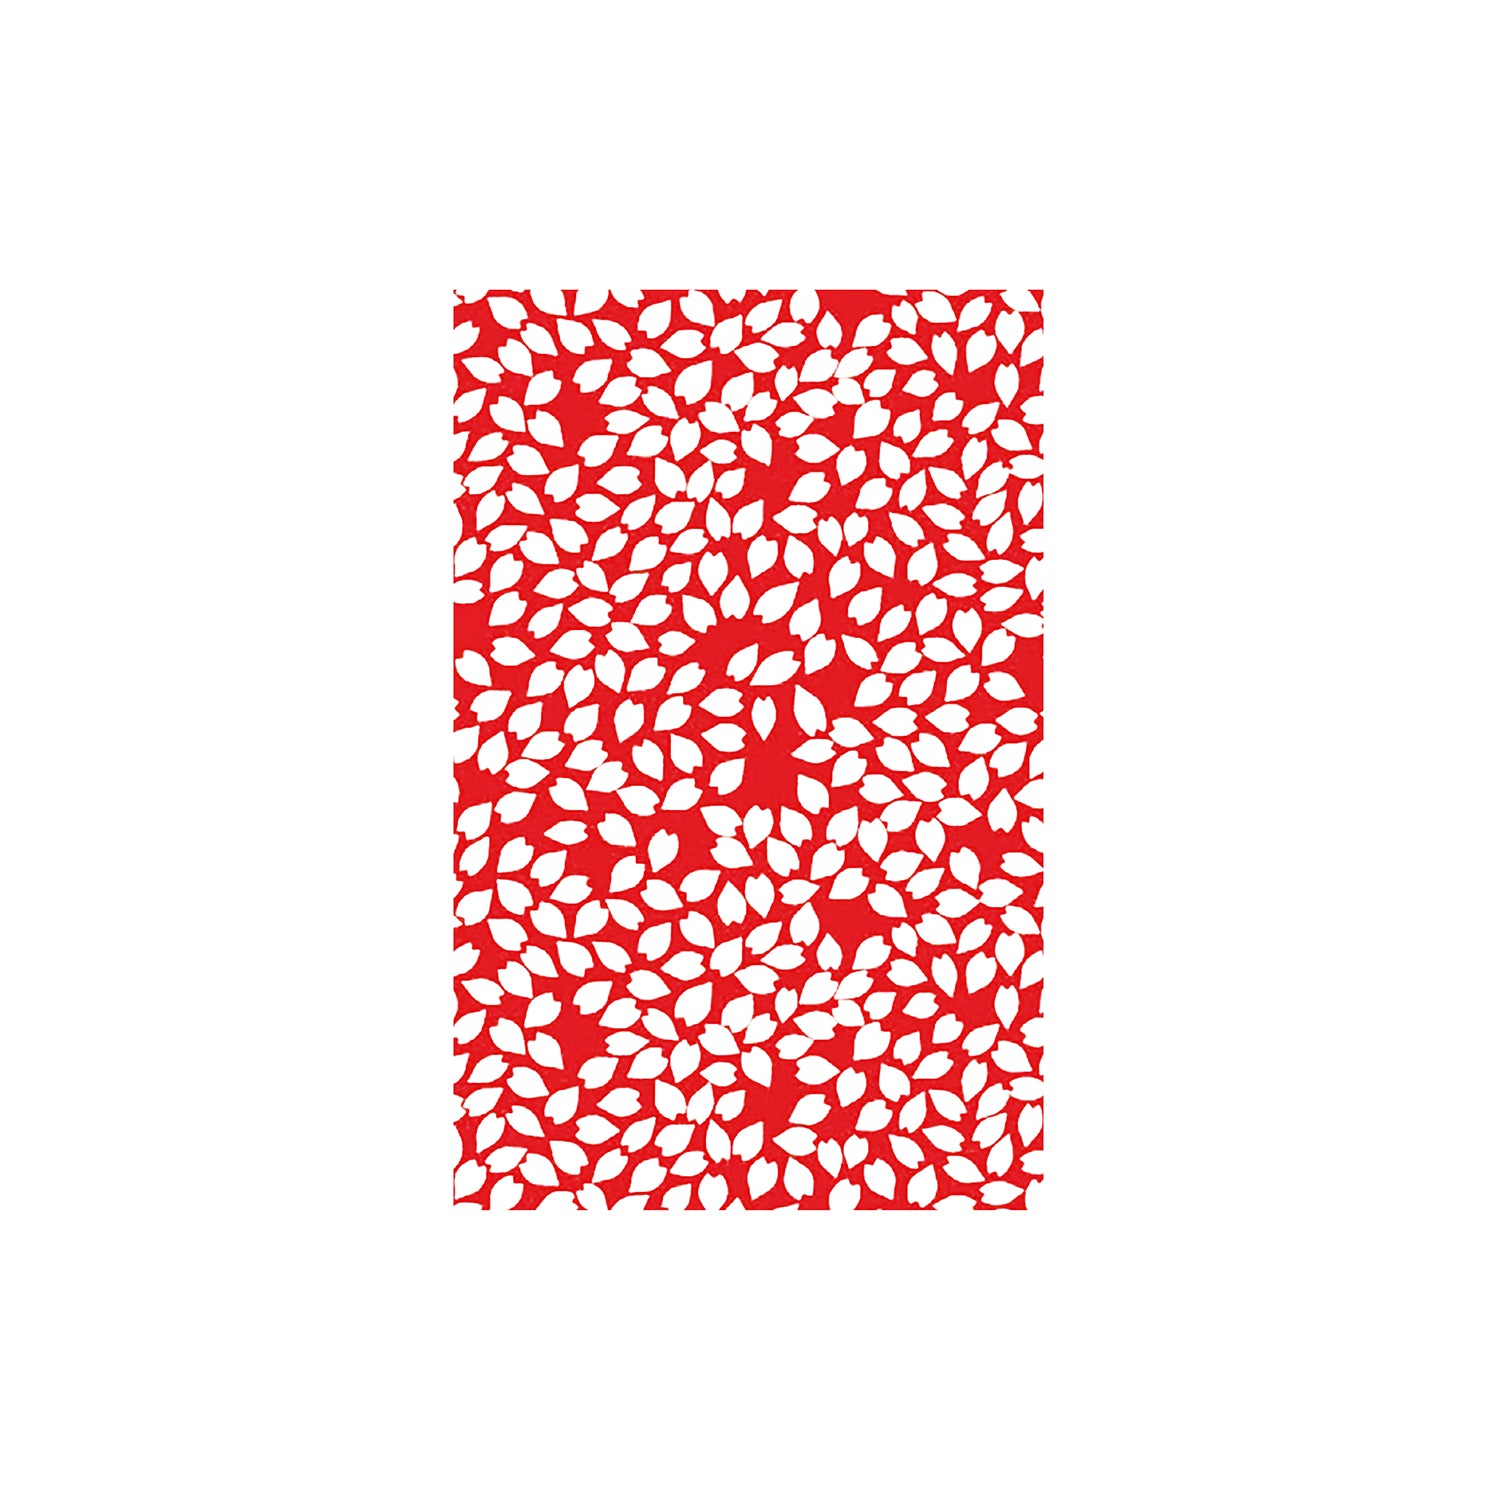 Shunkoen Mamimu Japanese Classic Motifs Mini Memo Notebook | Six Designs Random White Leaves on Red